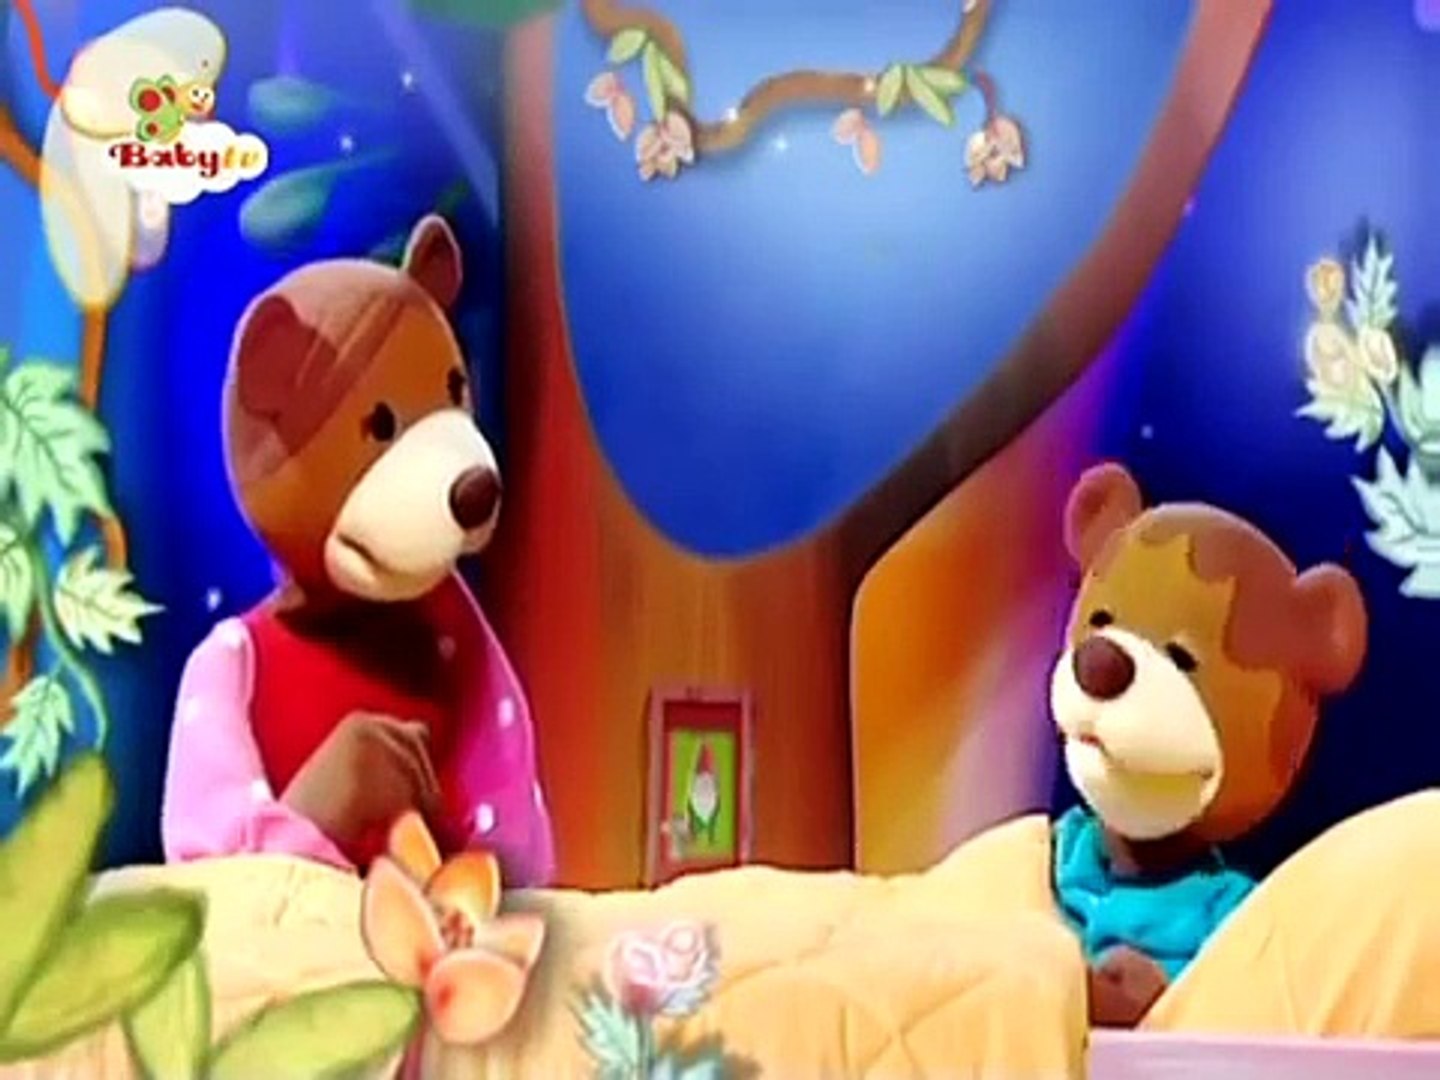 BabyTV Good night teddy bear in the bubble (english) - Dailymotion Video